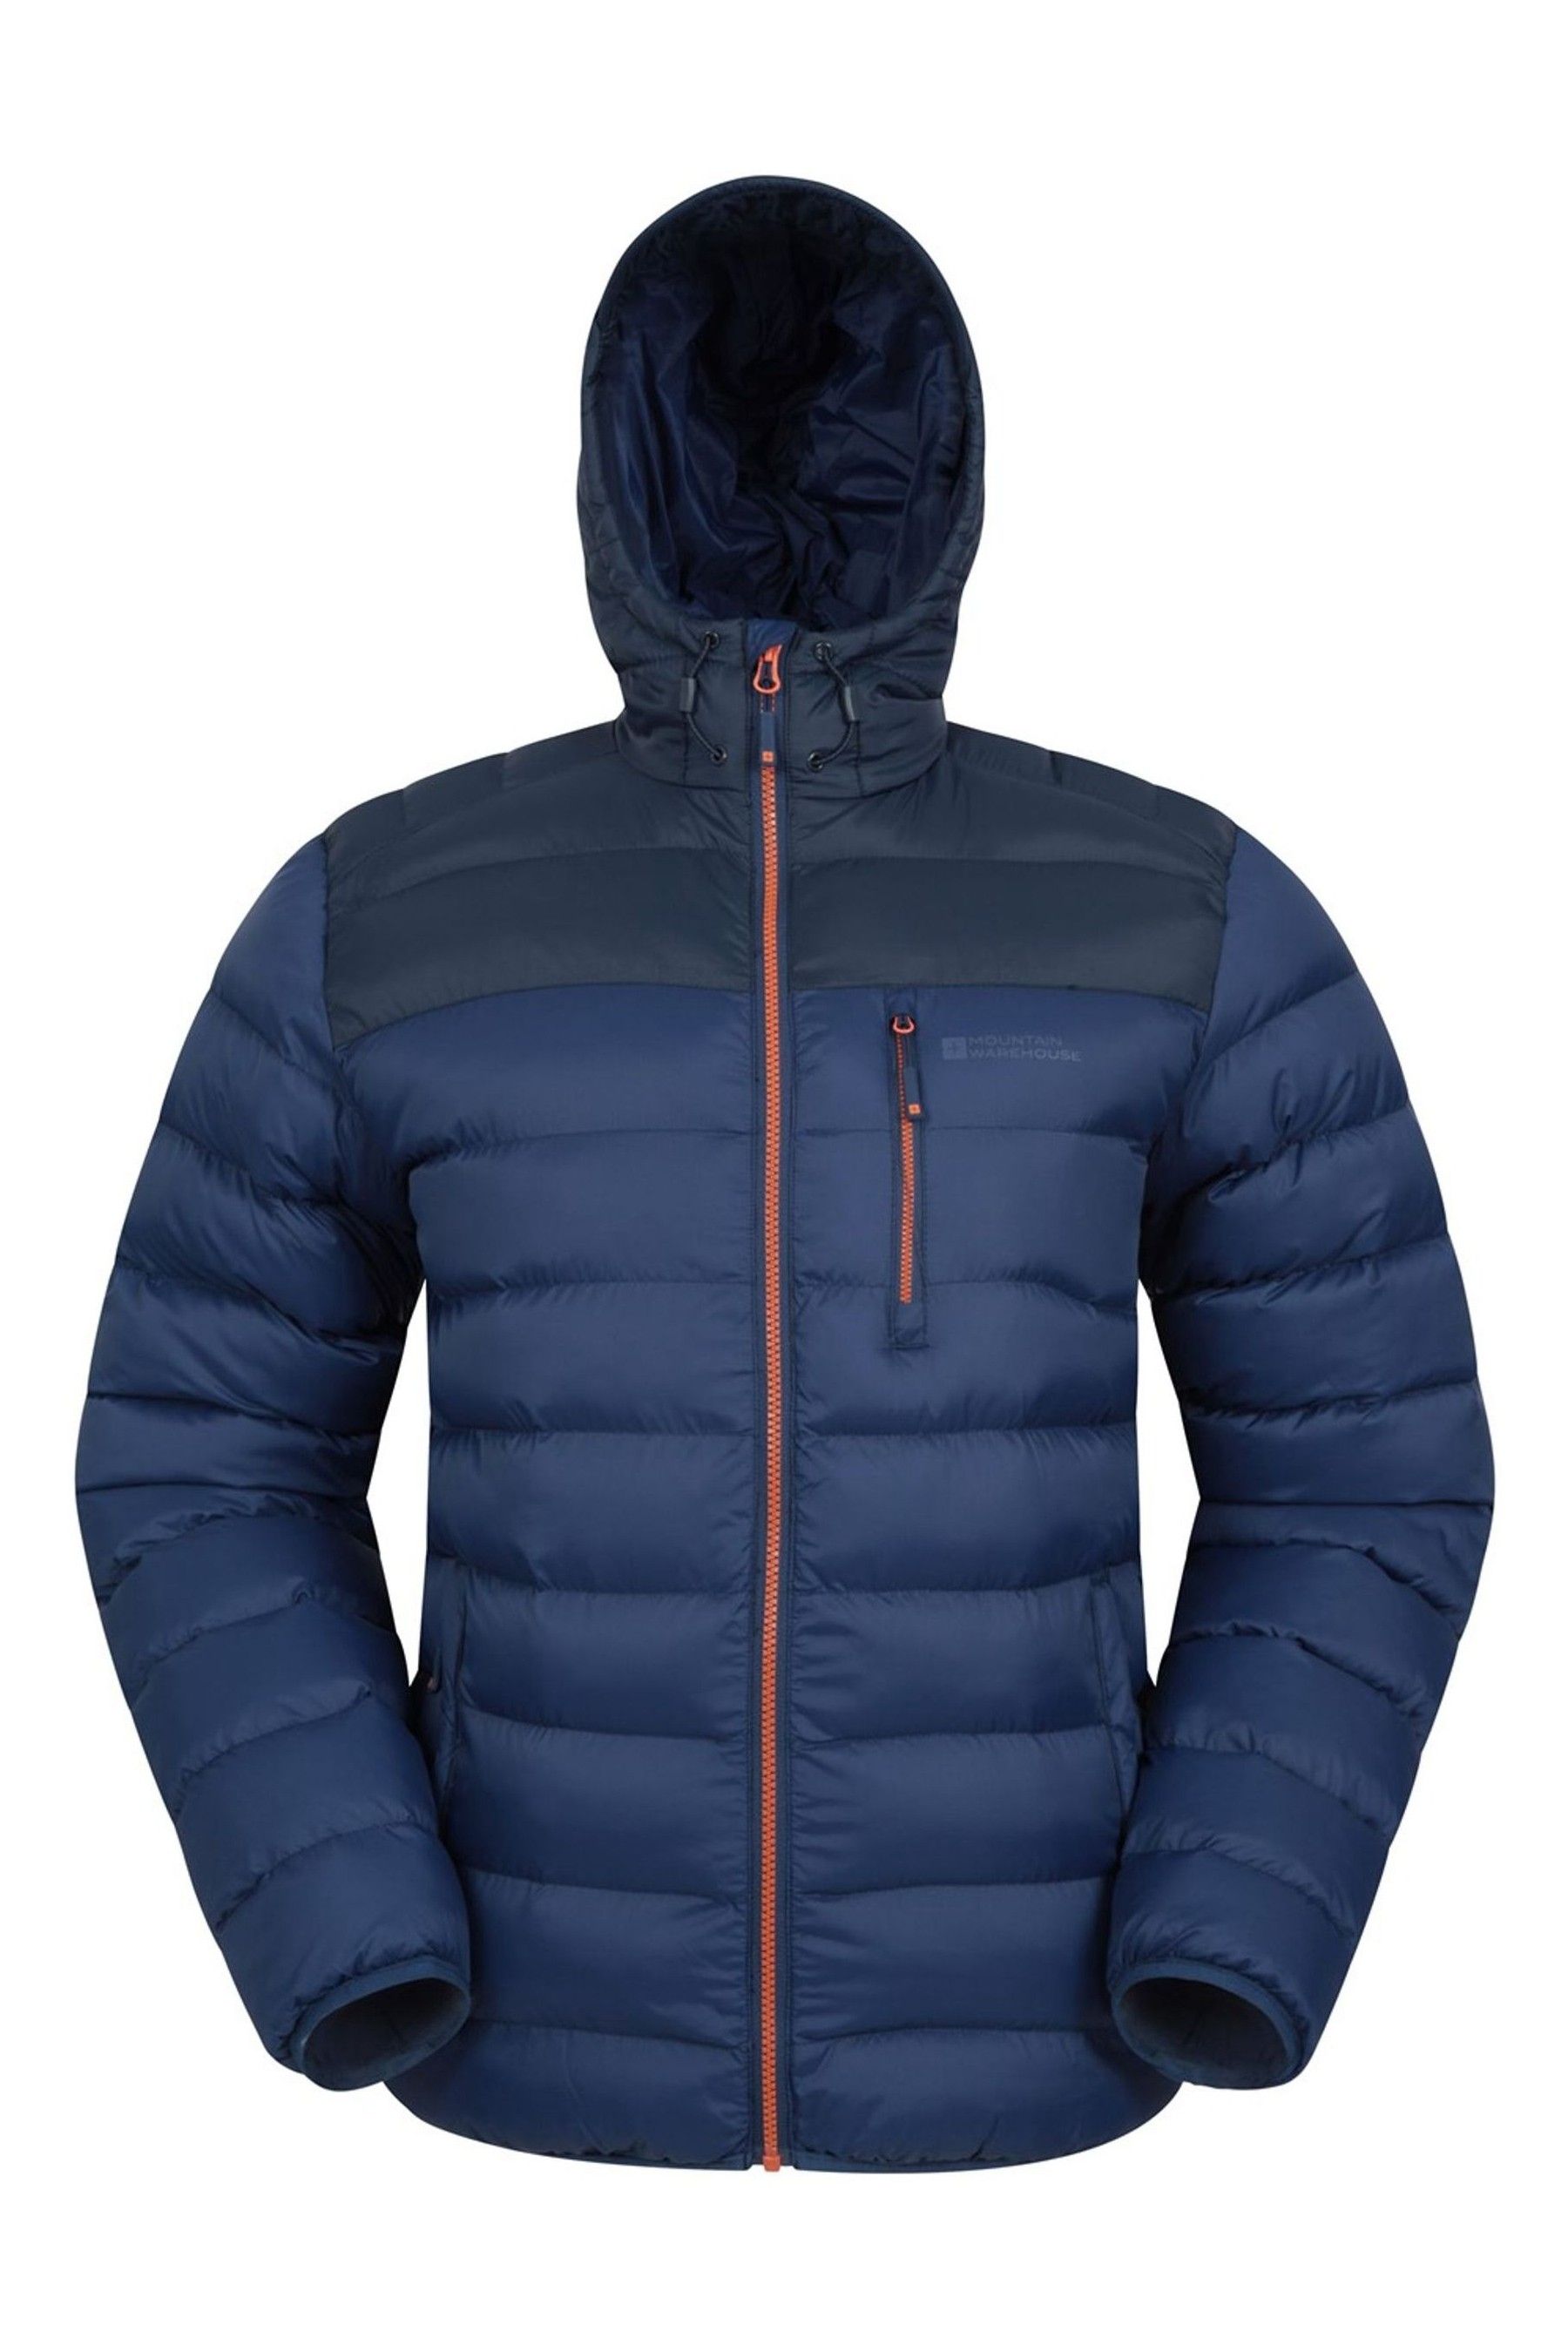 Link мужская утепленная куртка Mountain Warehouse, синий куртка утепленная мужская demix синий